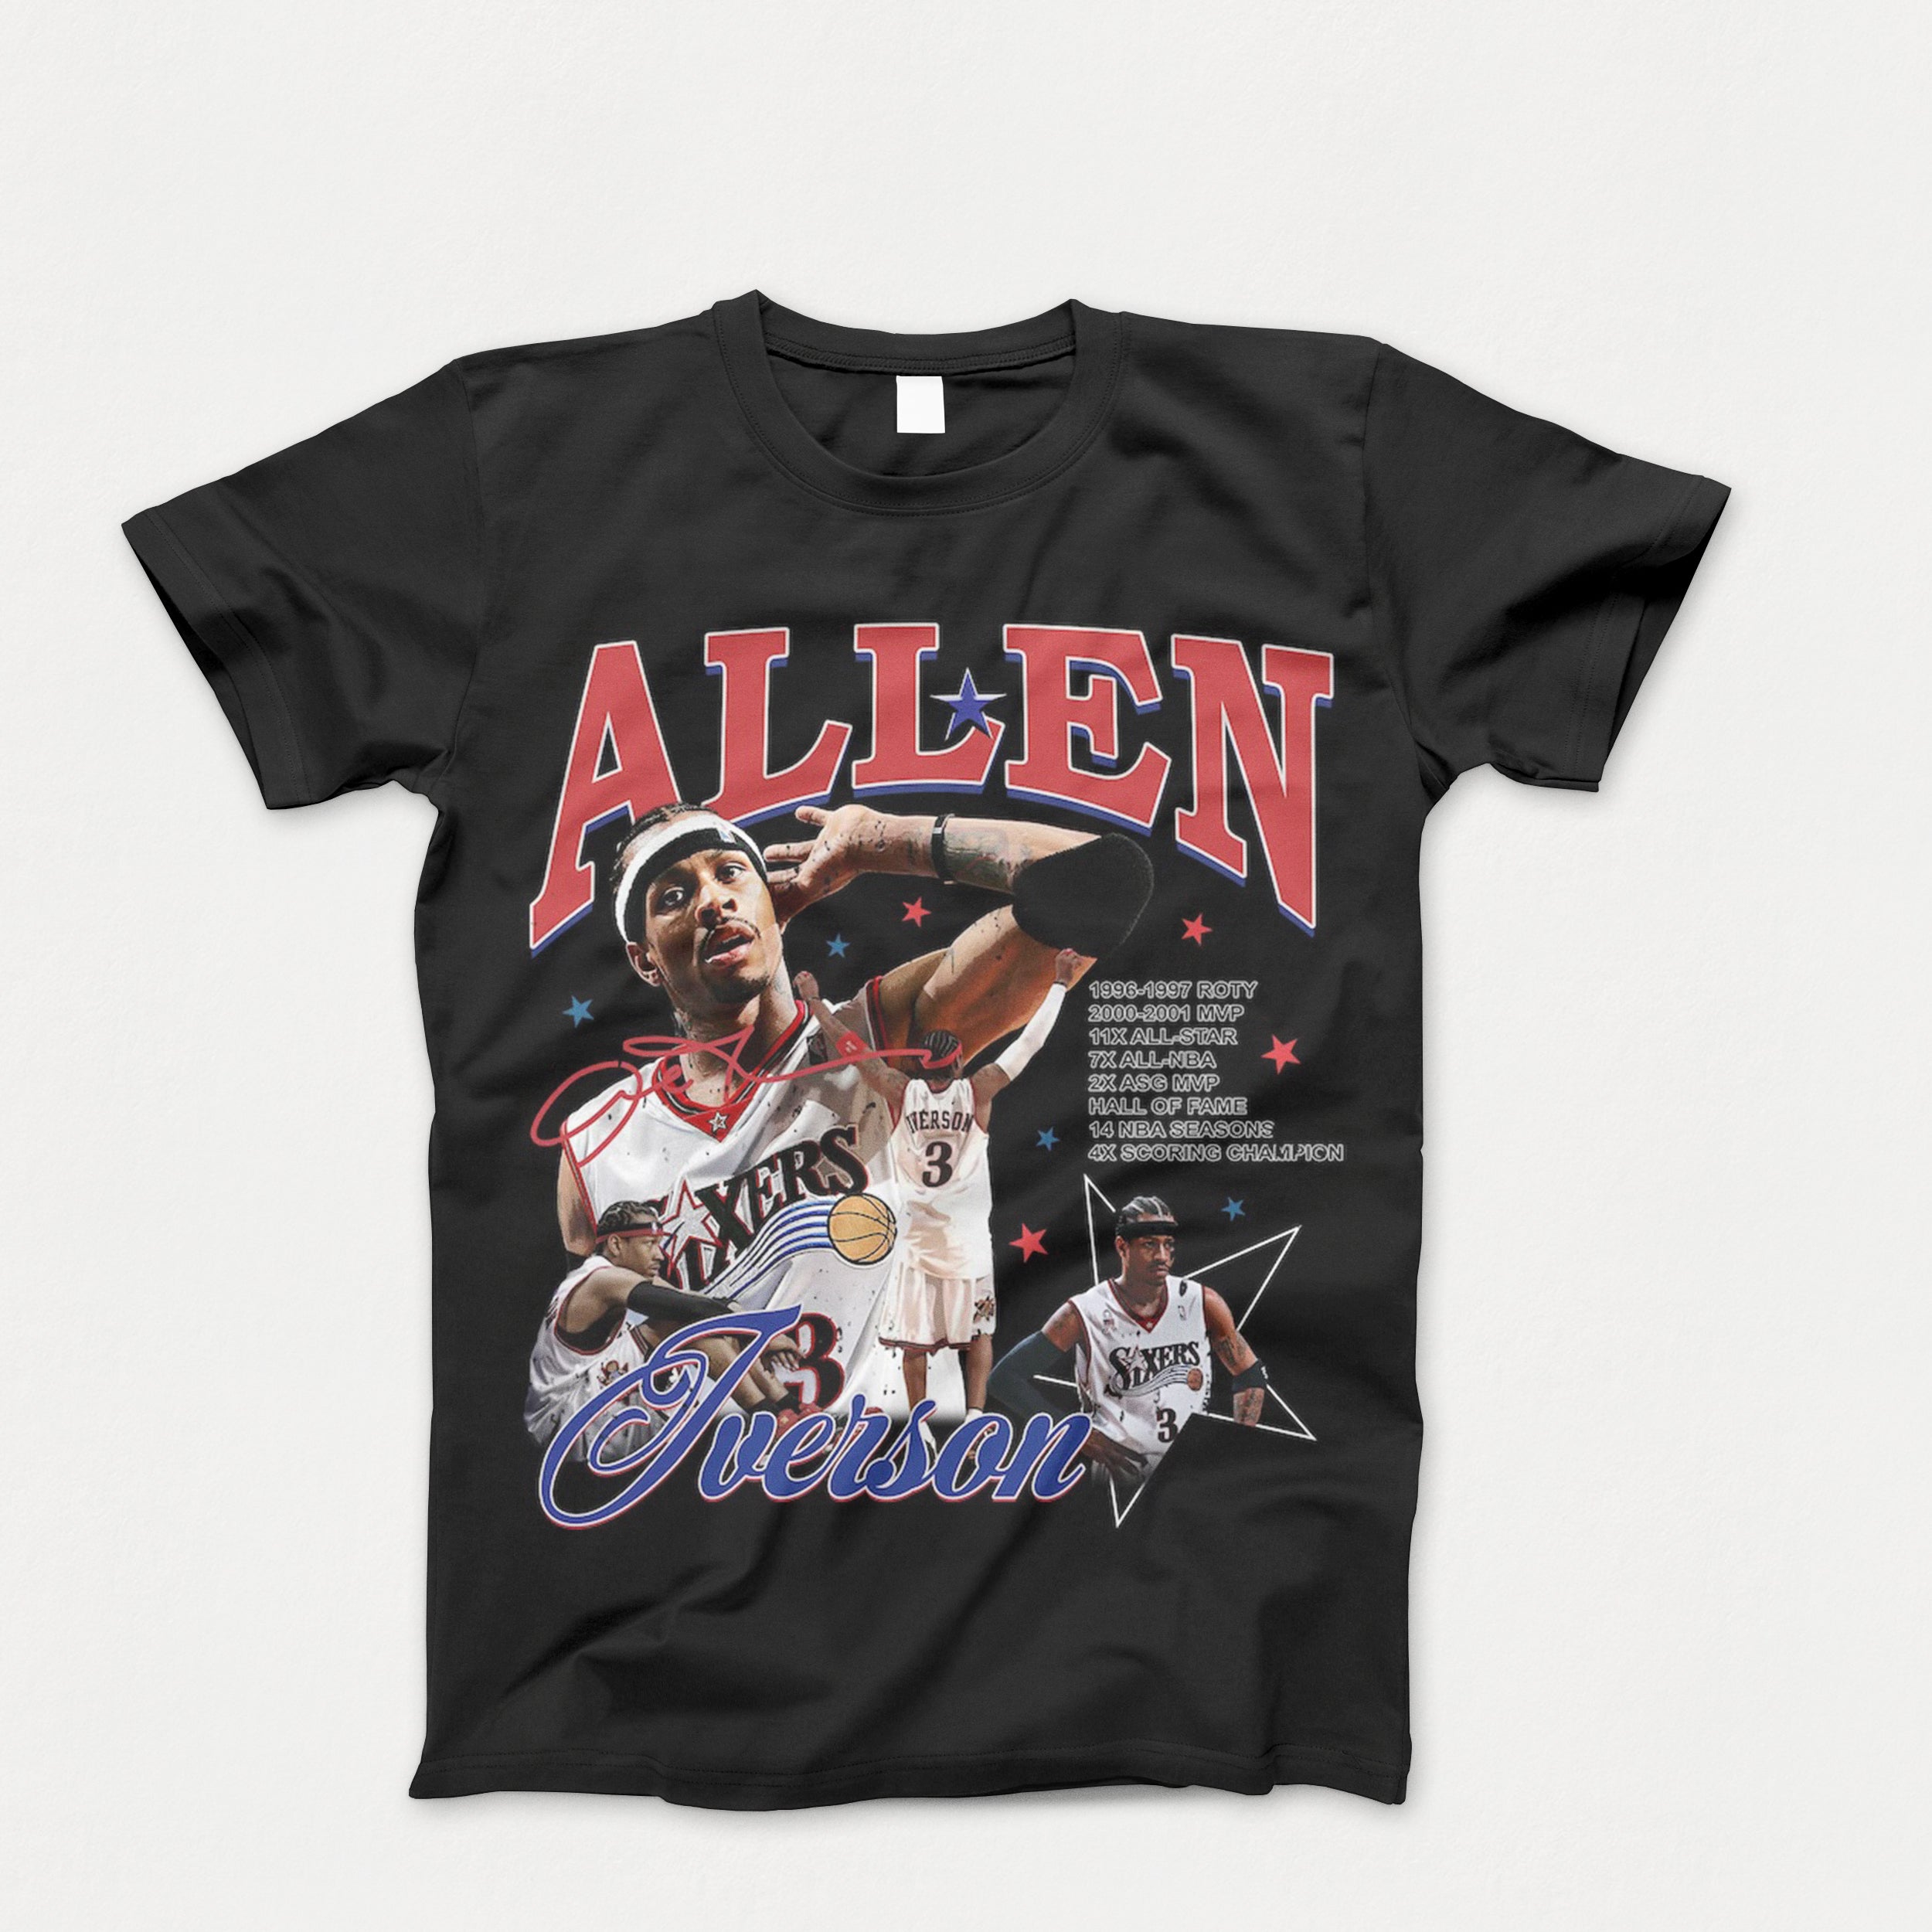 Unisex Adult Allen Iverson Tee Shirt